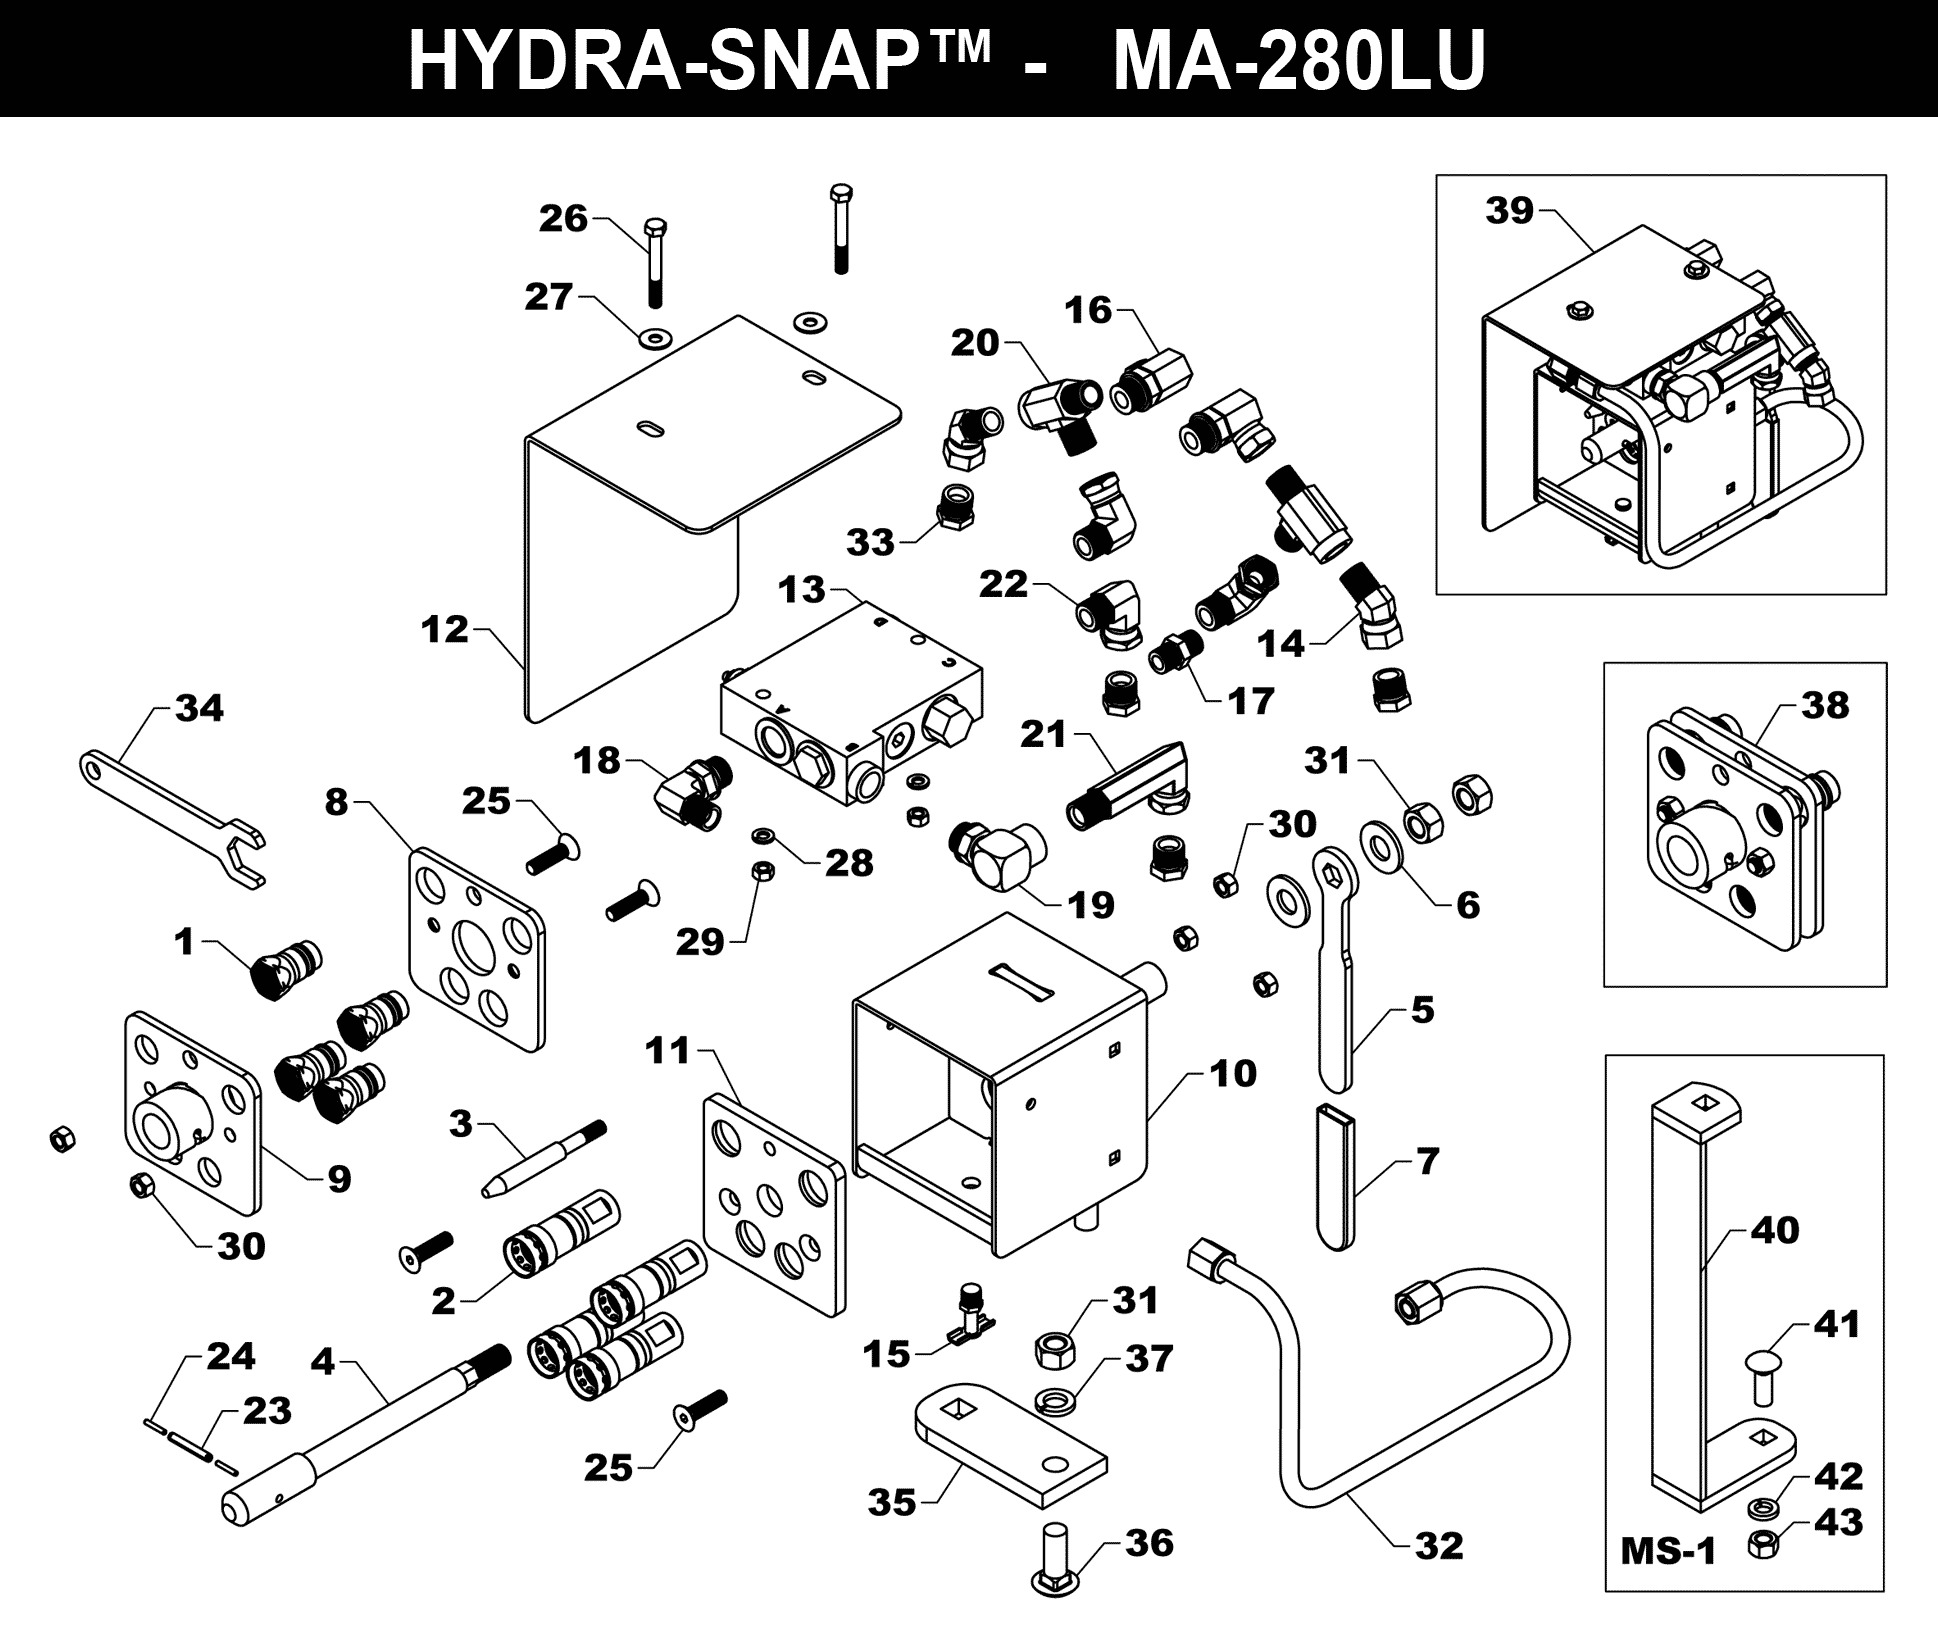 Hydra-Snap™ - MA-280LU